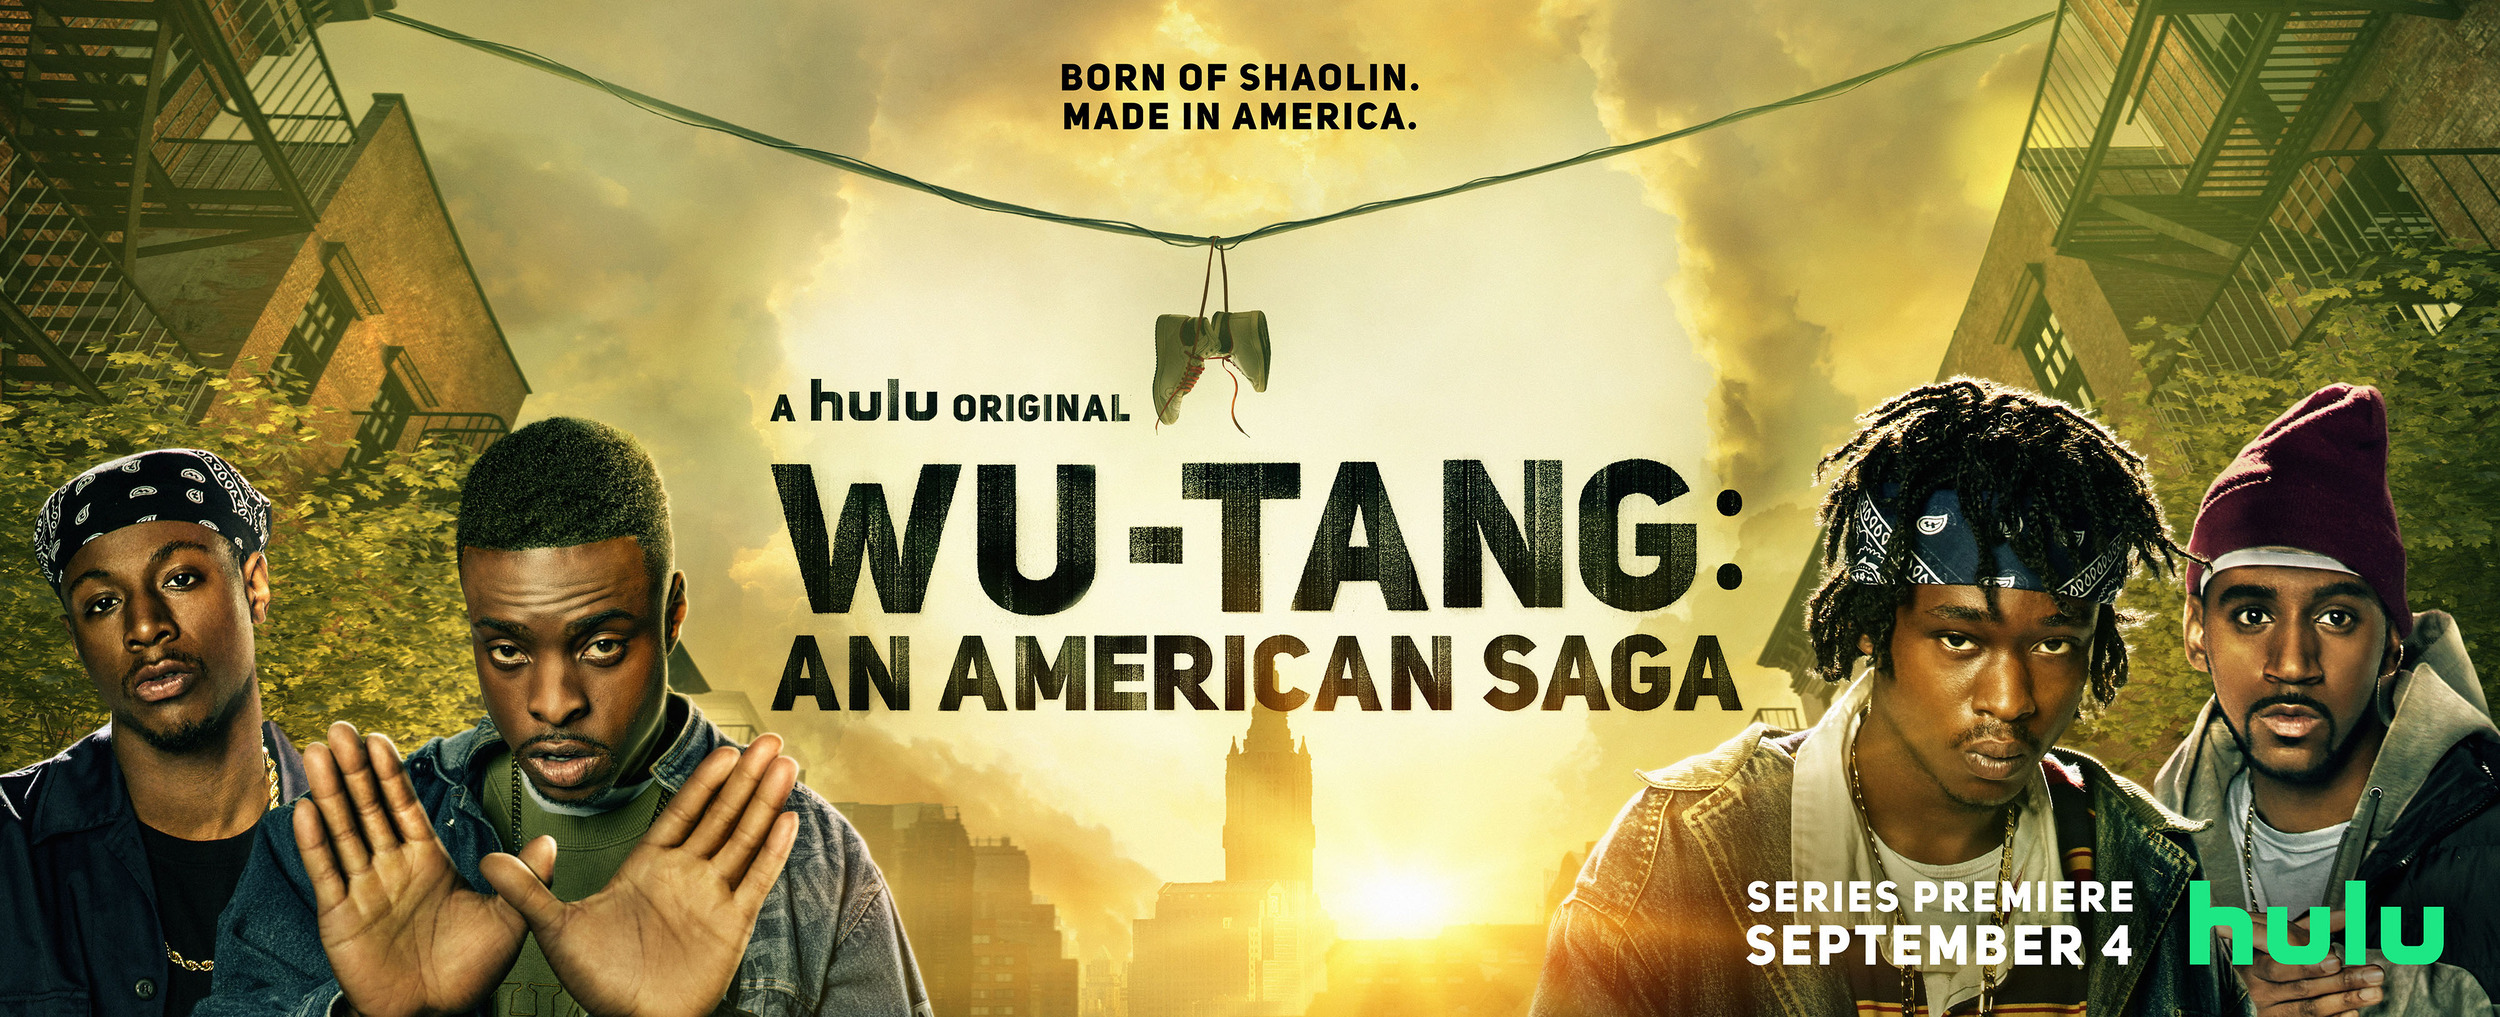 Mega Sized TV Poster Image for Wu-Tang: An American Saga (#10 of 22)